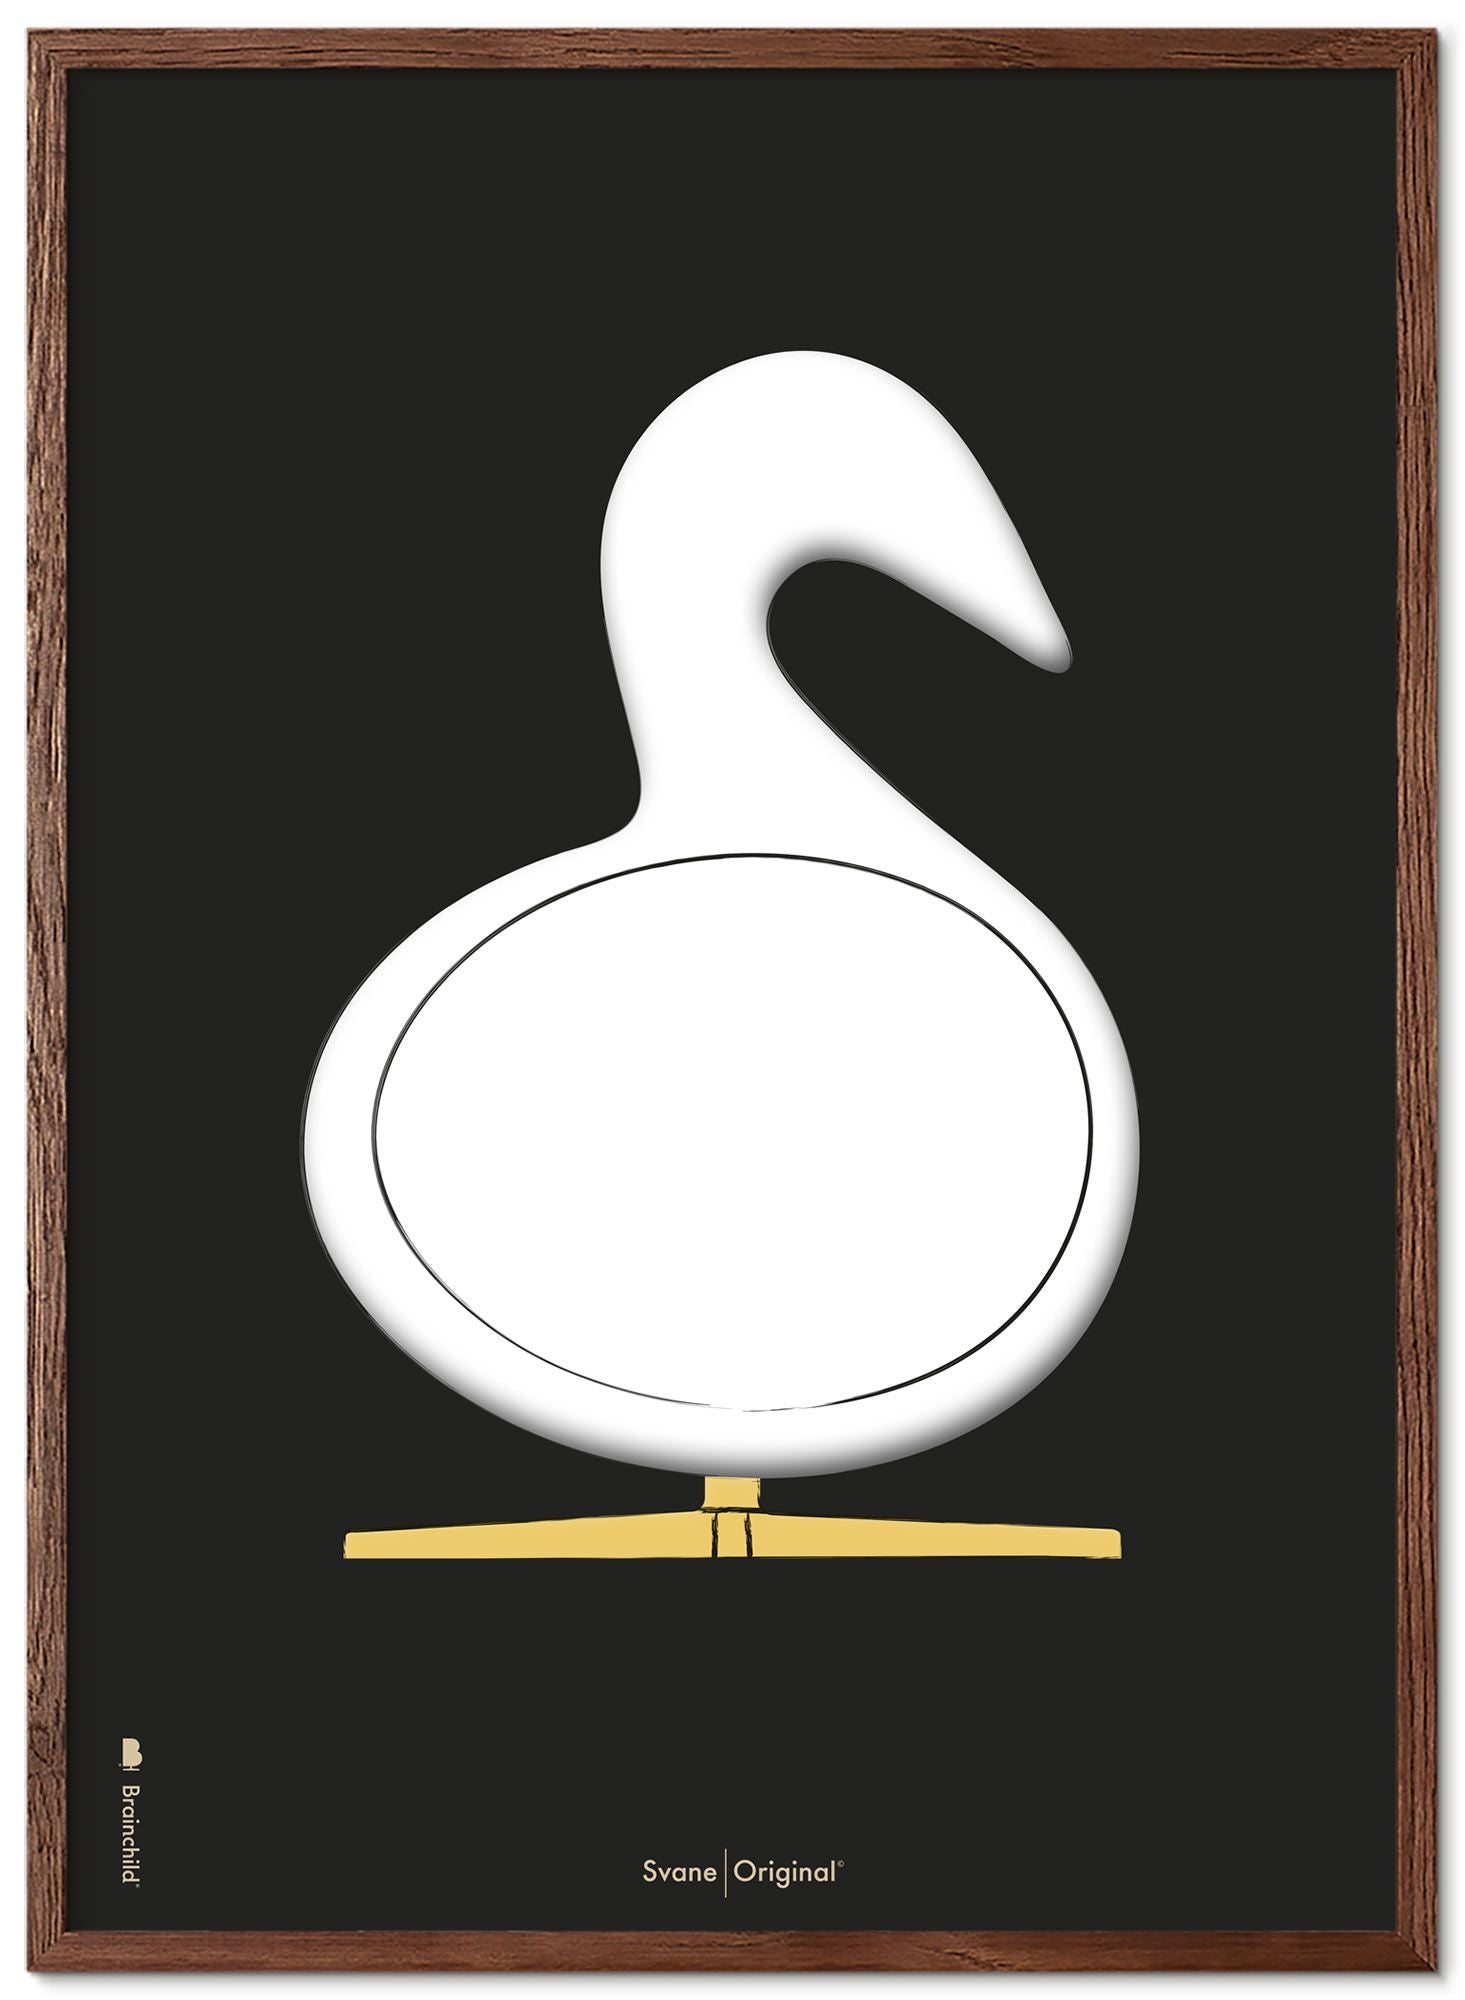 Brainchild Swan Design Sketch Poster Frame Made Of Dark Wood A5, Black Background